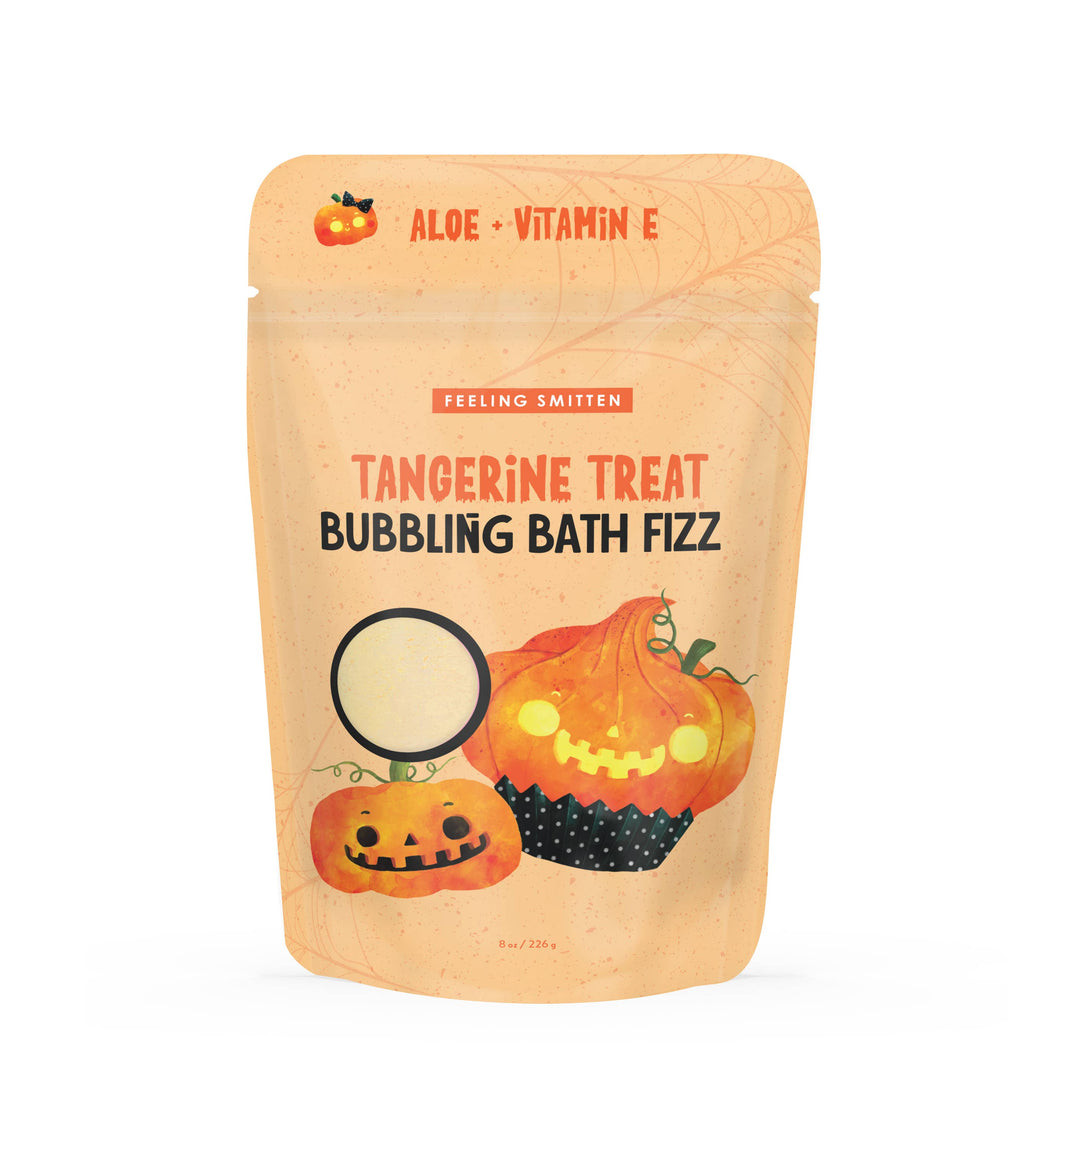 Tangerine Treat Bubbling Bath Fizz Feeling Smitten 0 Faire Bonjour Fete - Party Supplies